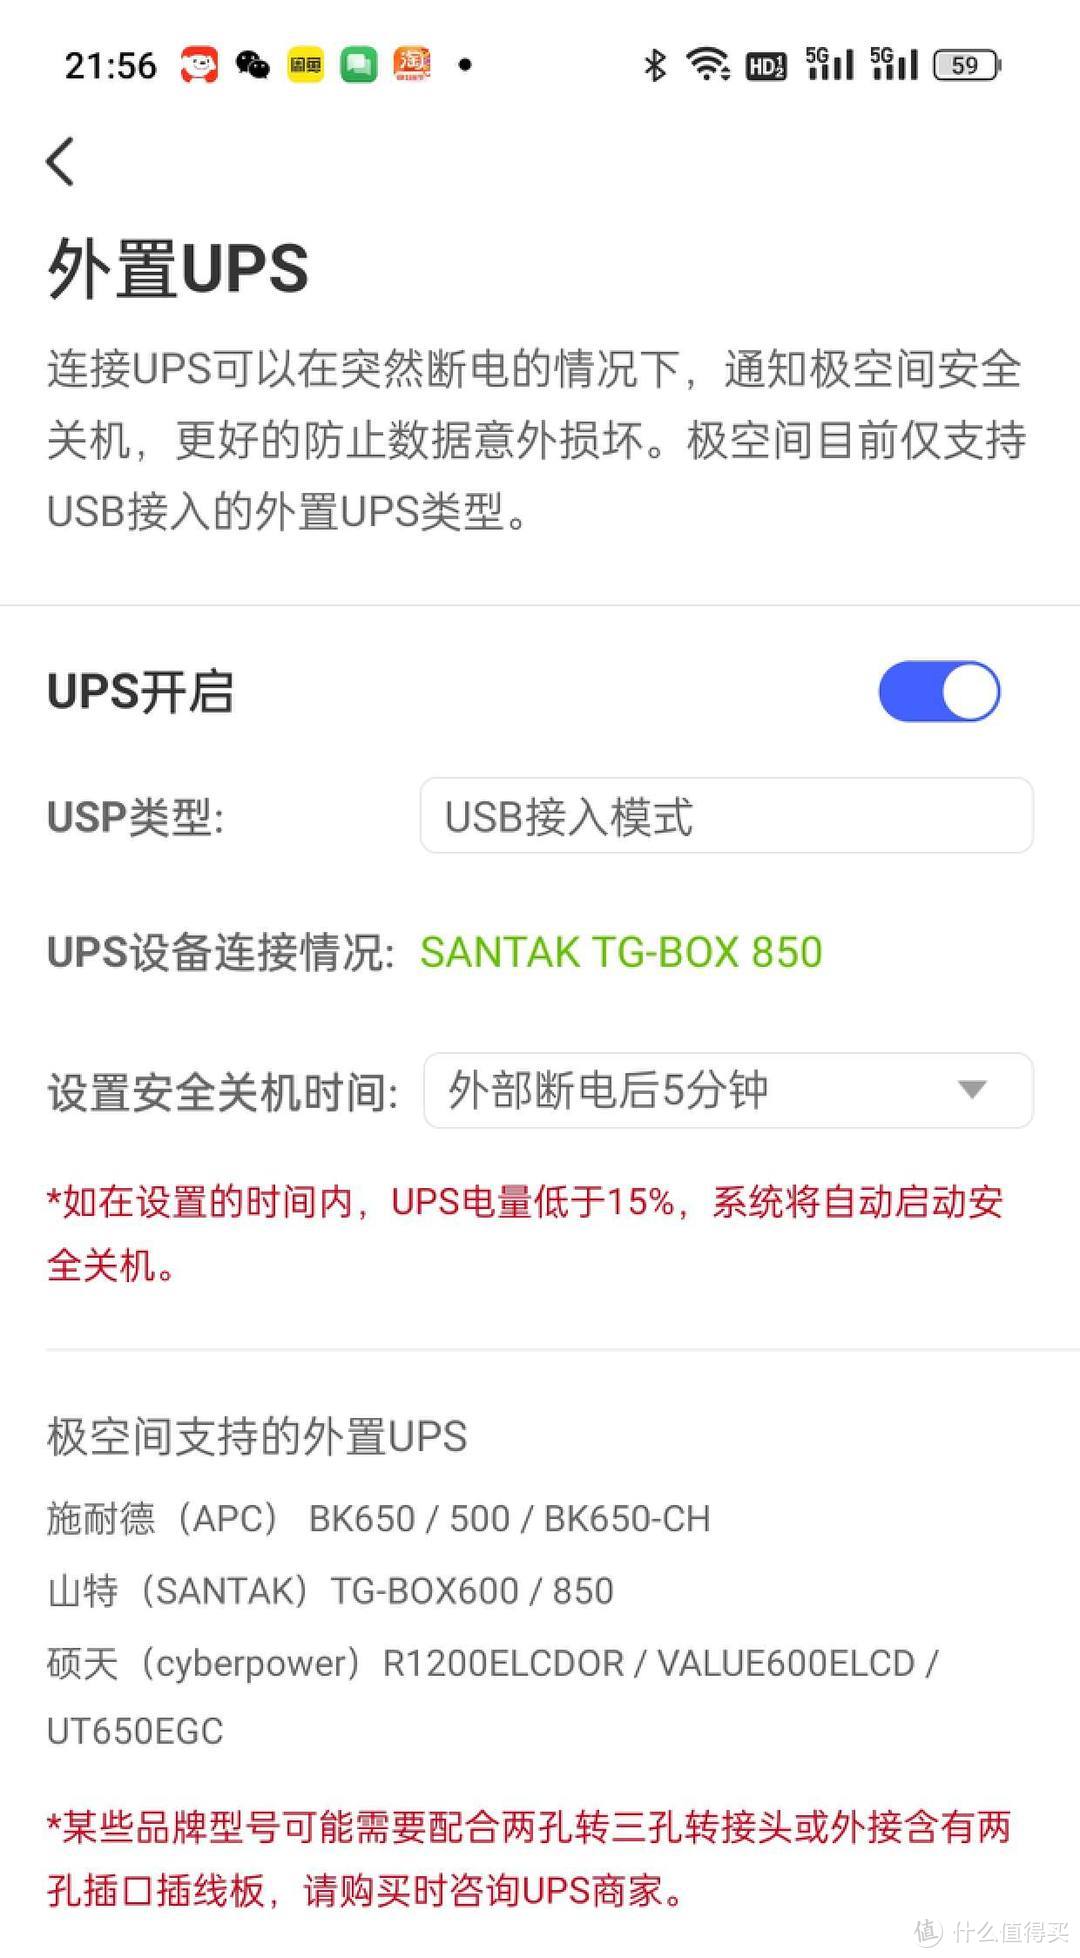 NAS必备 - 山特TG-BOX850 UPS